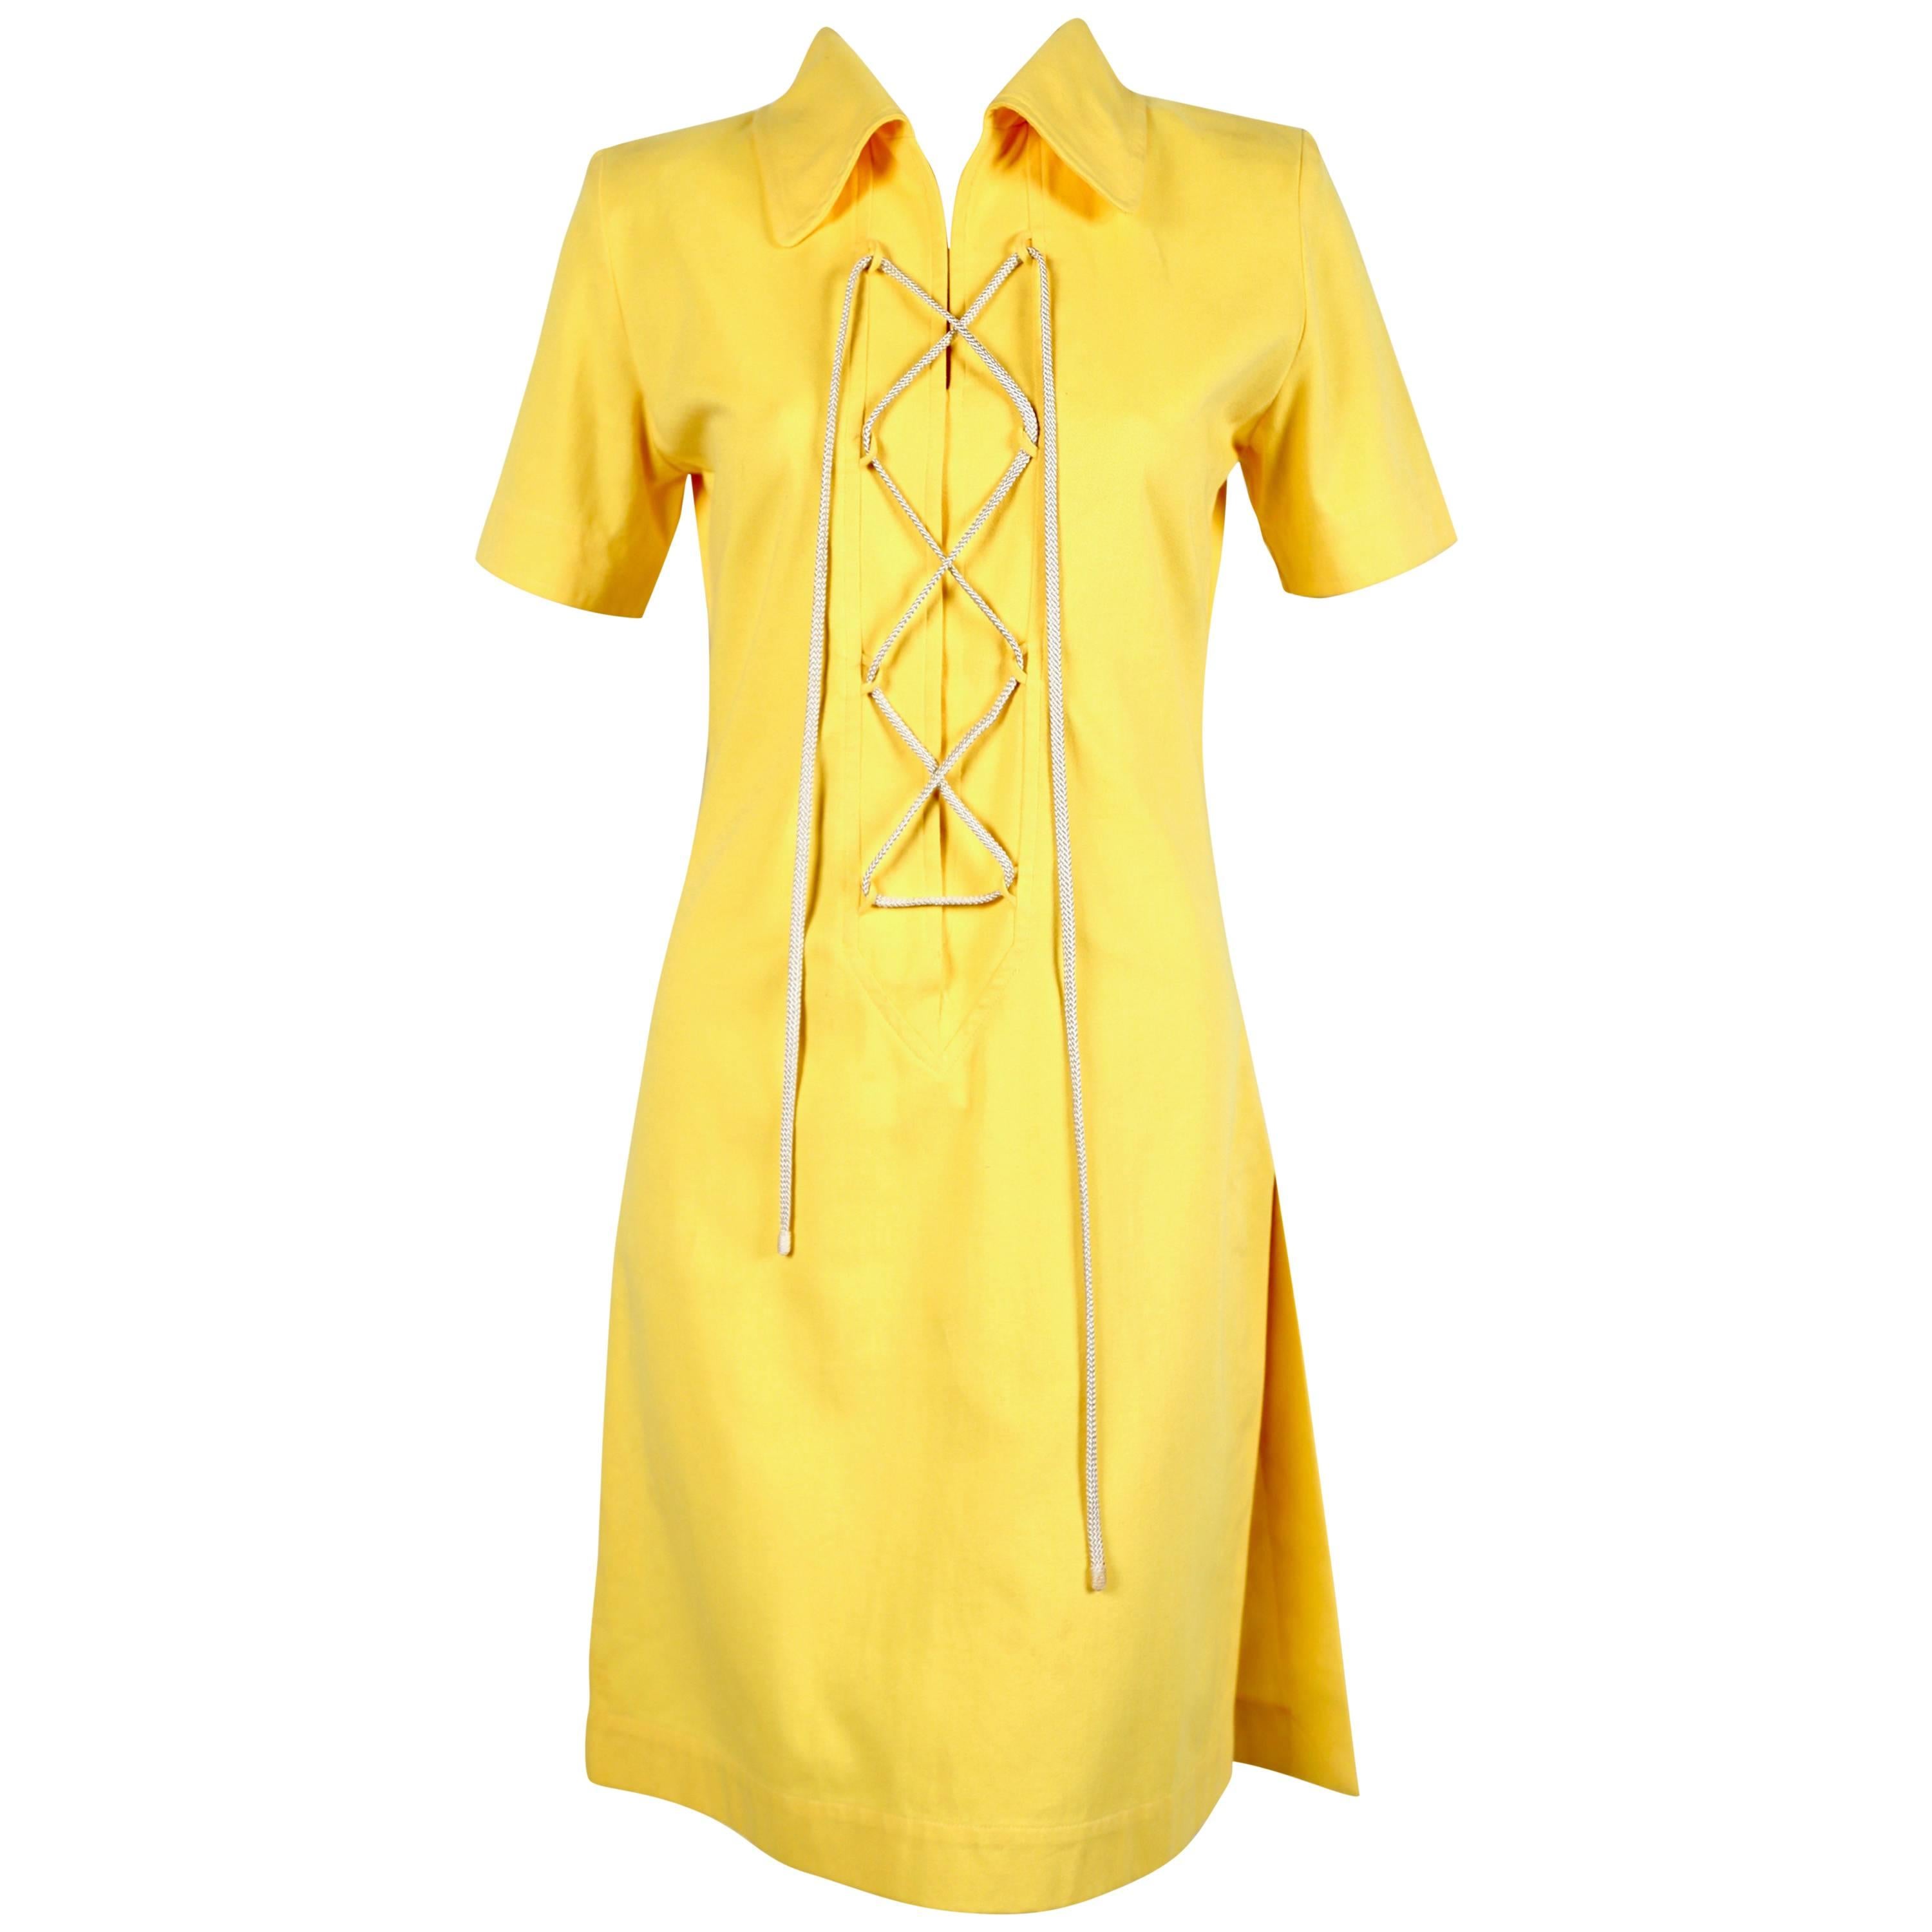 1980's YVES SAINT LAURENT yellow safari dress